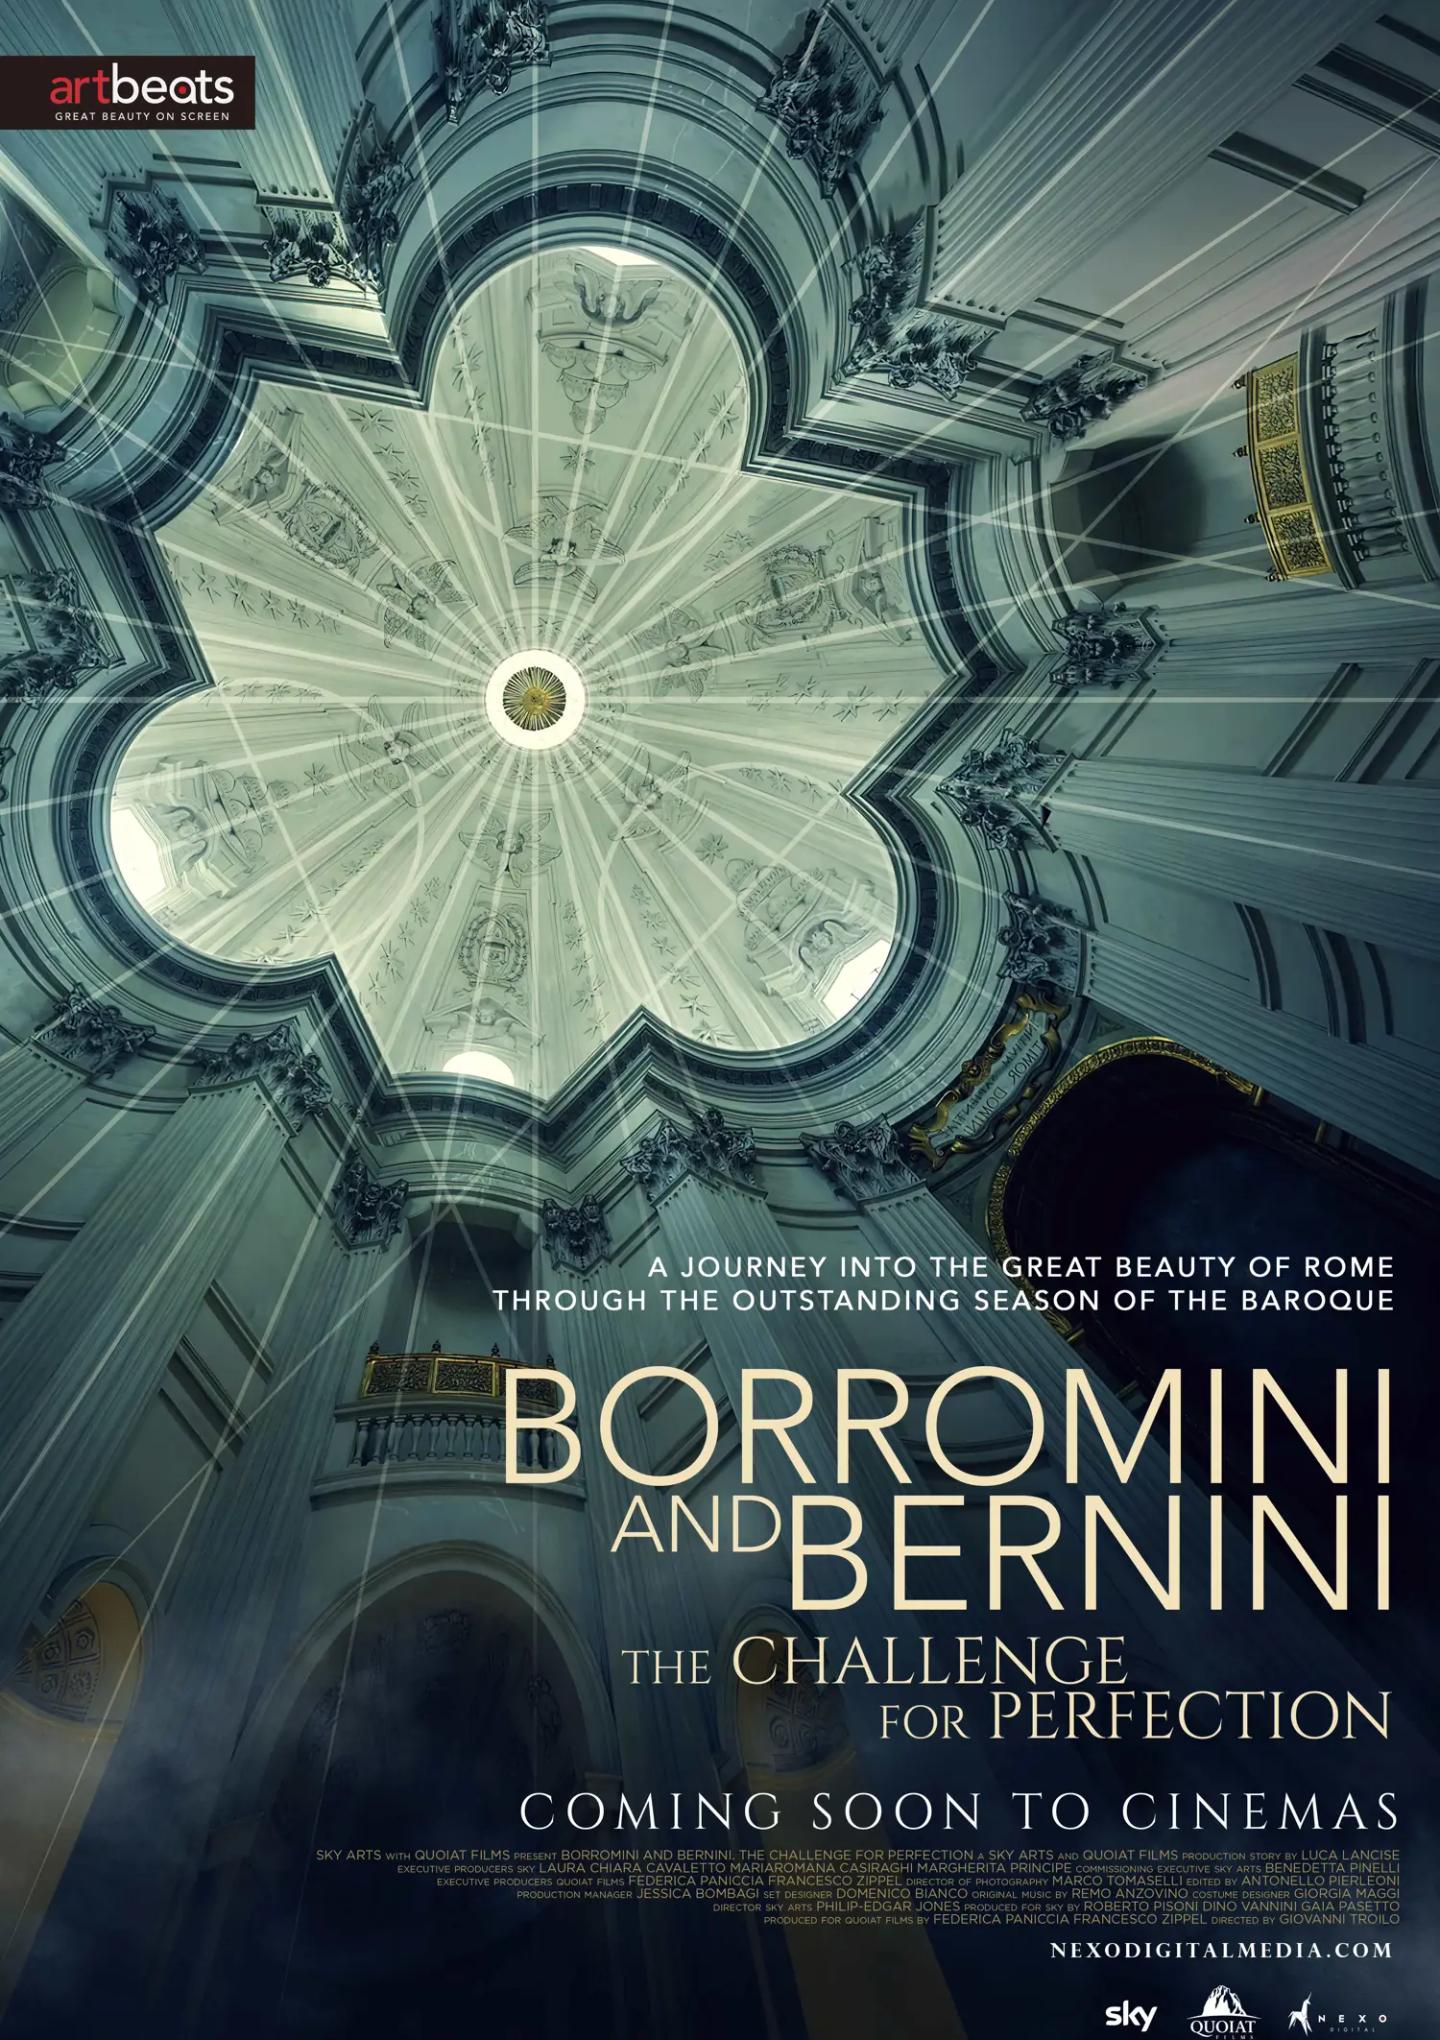 Plakat for 'Borromini and Bernini: Challenge for Perfection'